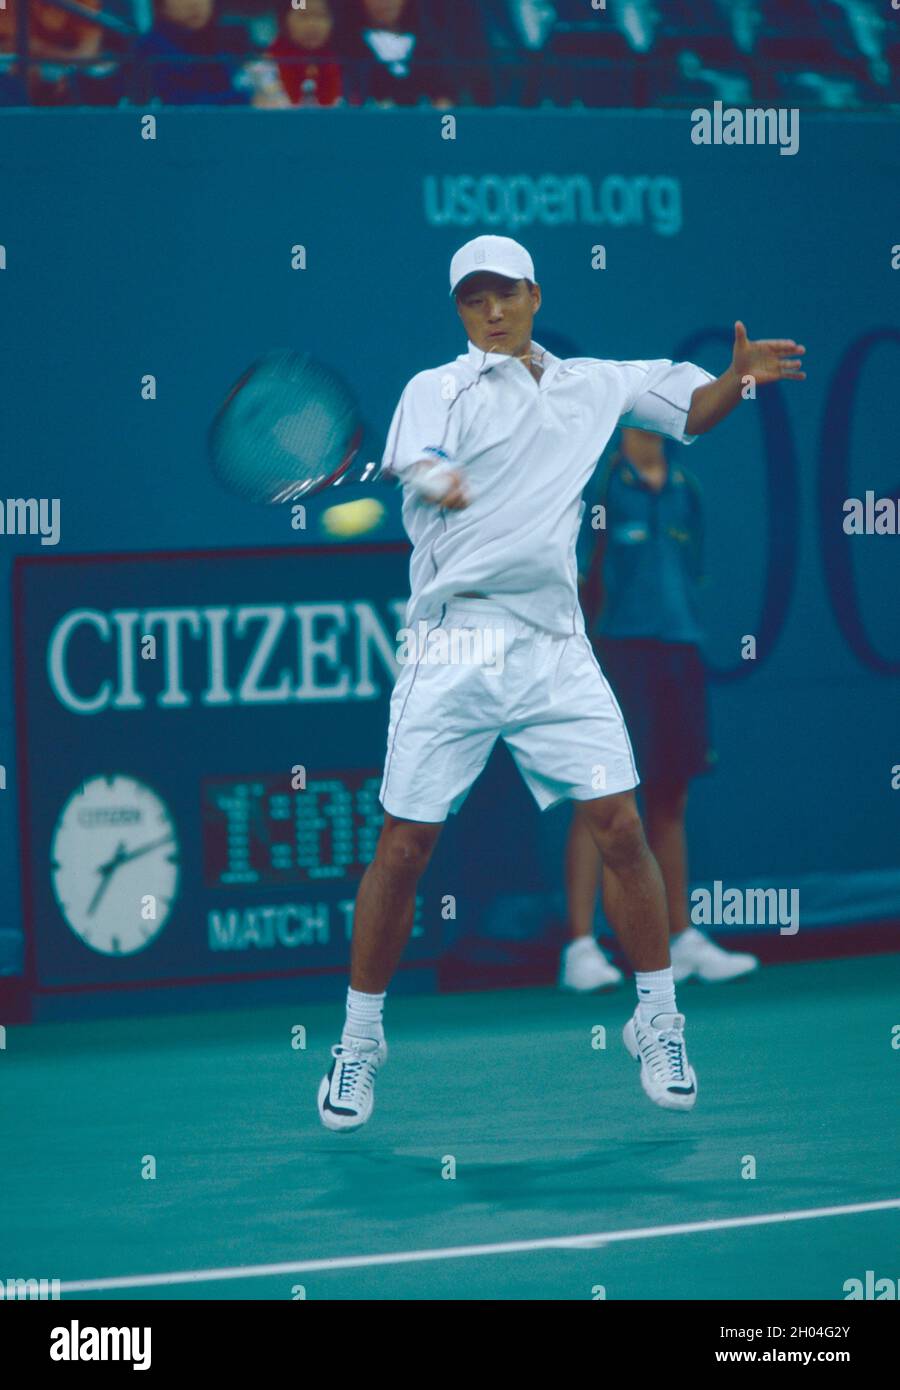 South Korean tennis player Hyung-taik Lee, US Open 2000 Stock Photo